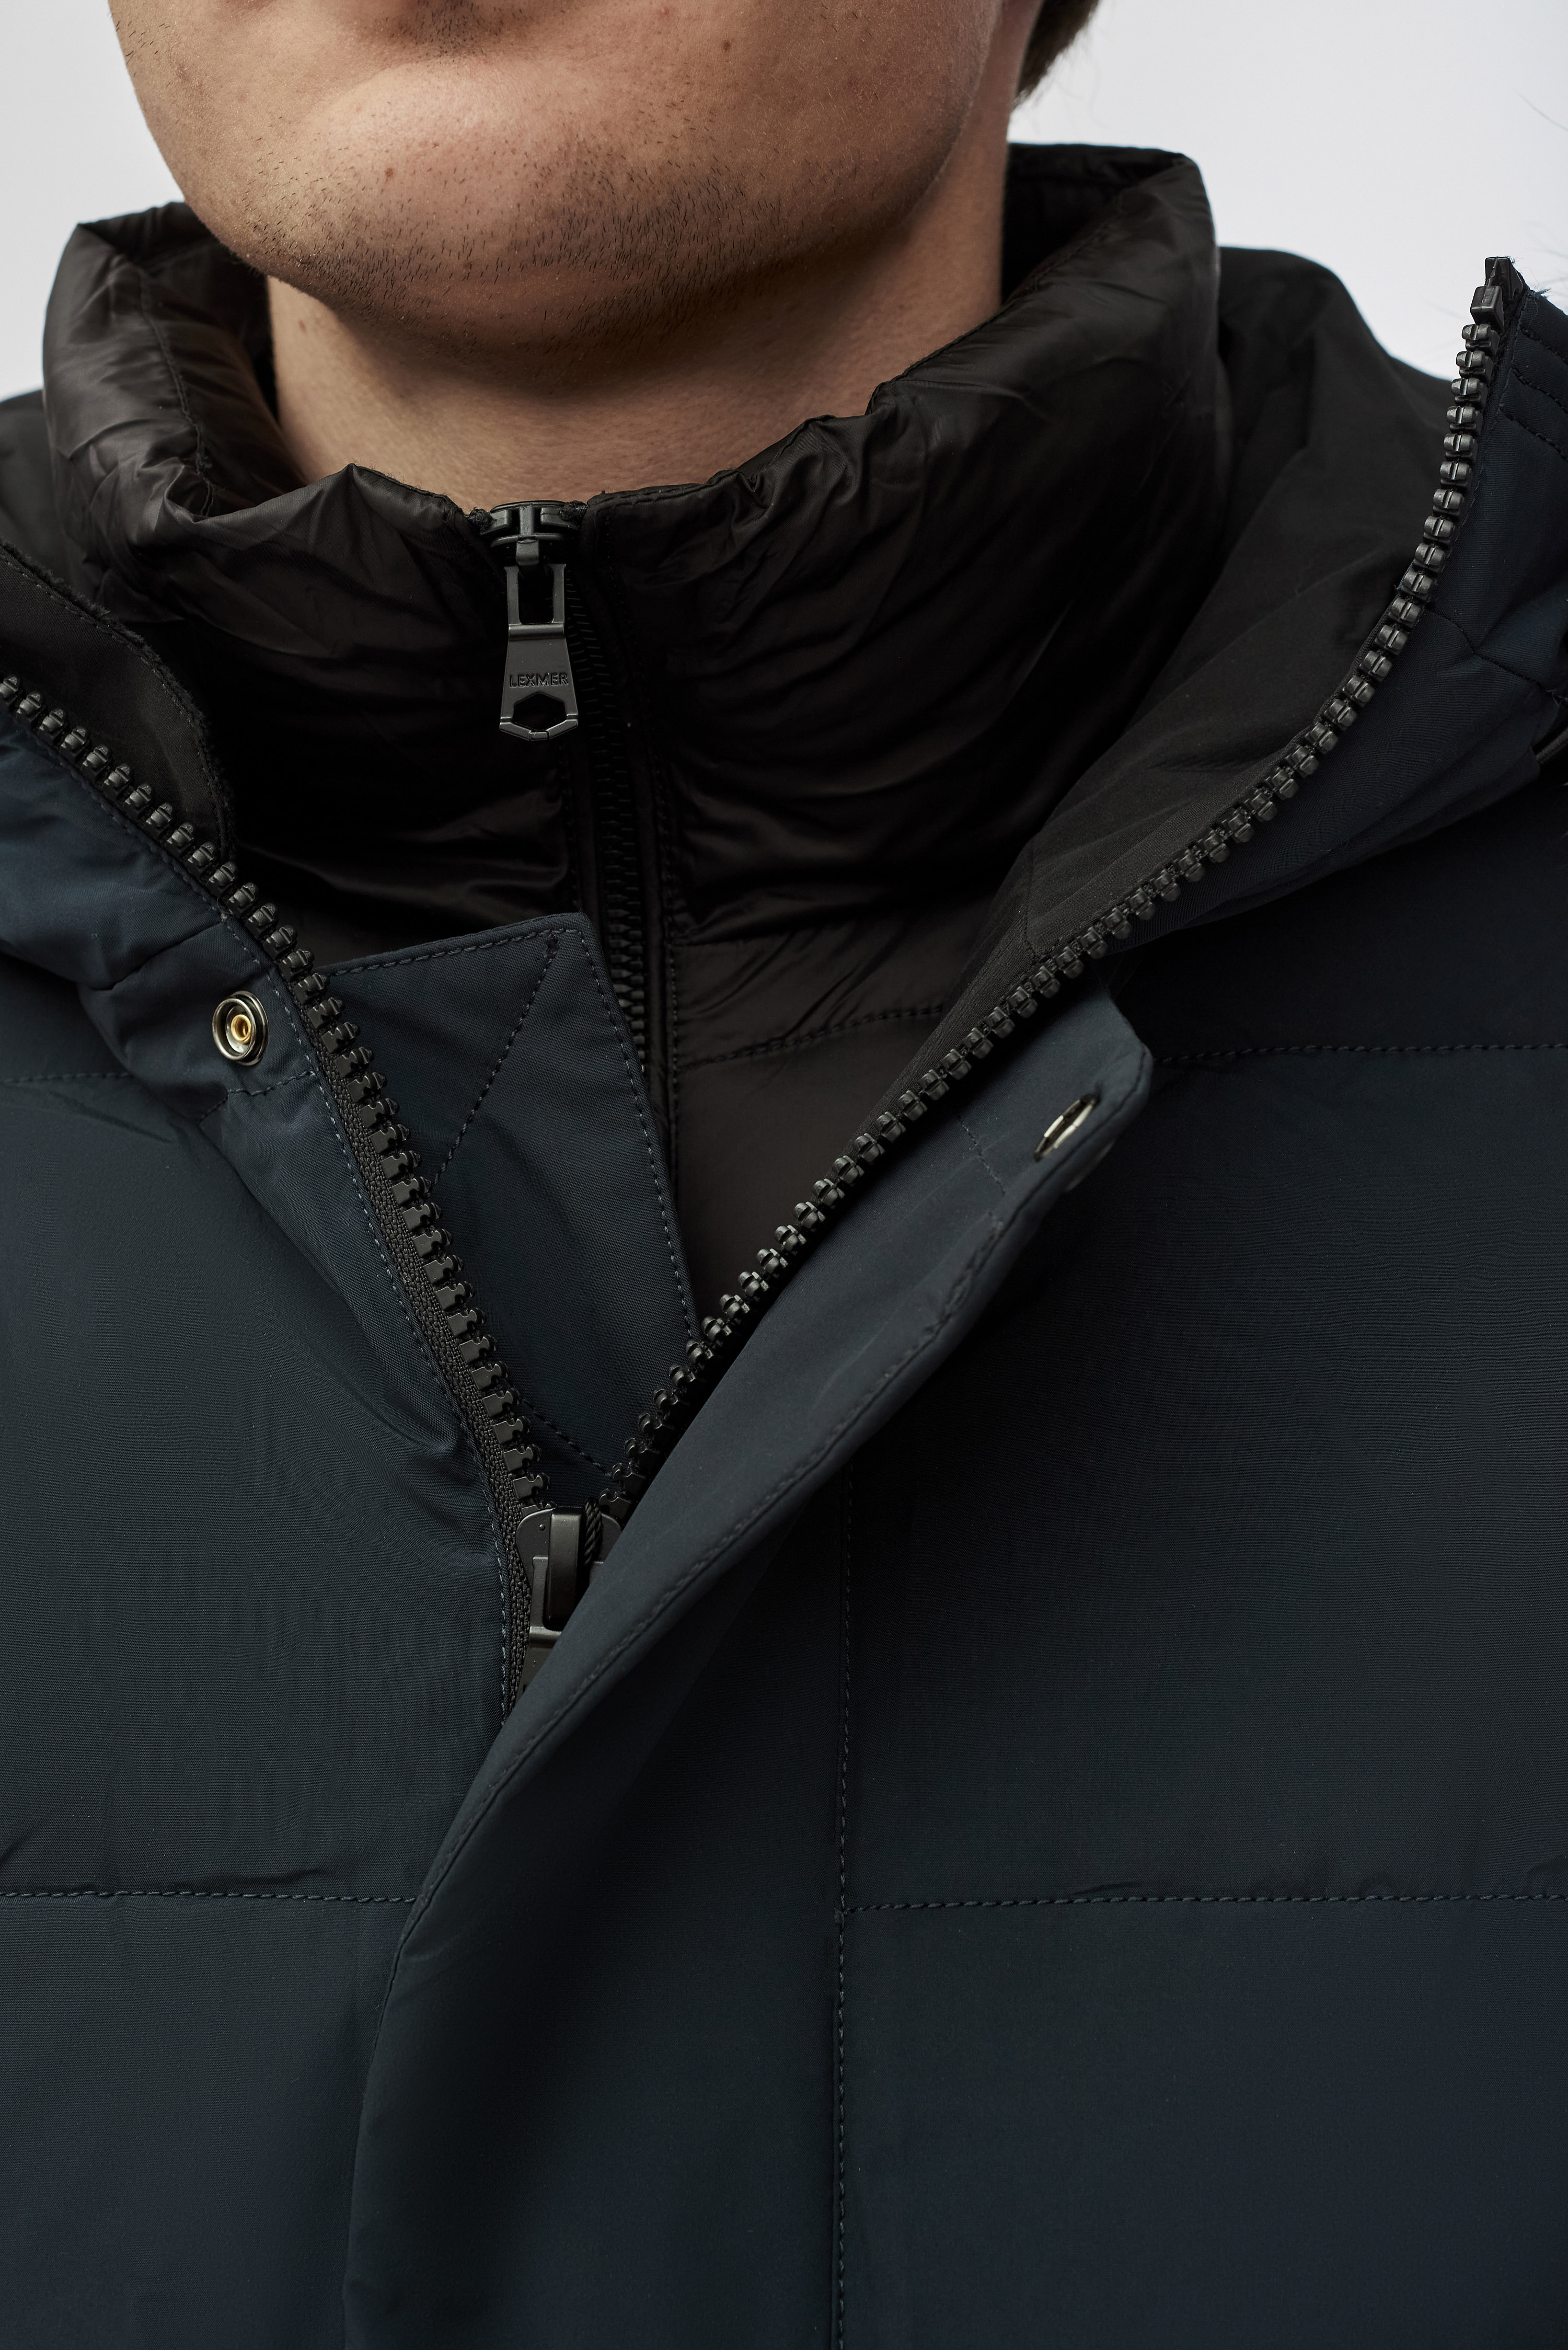 Куртка мужская NW-KM-1724F